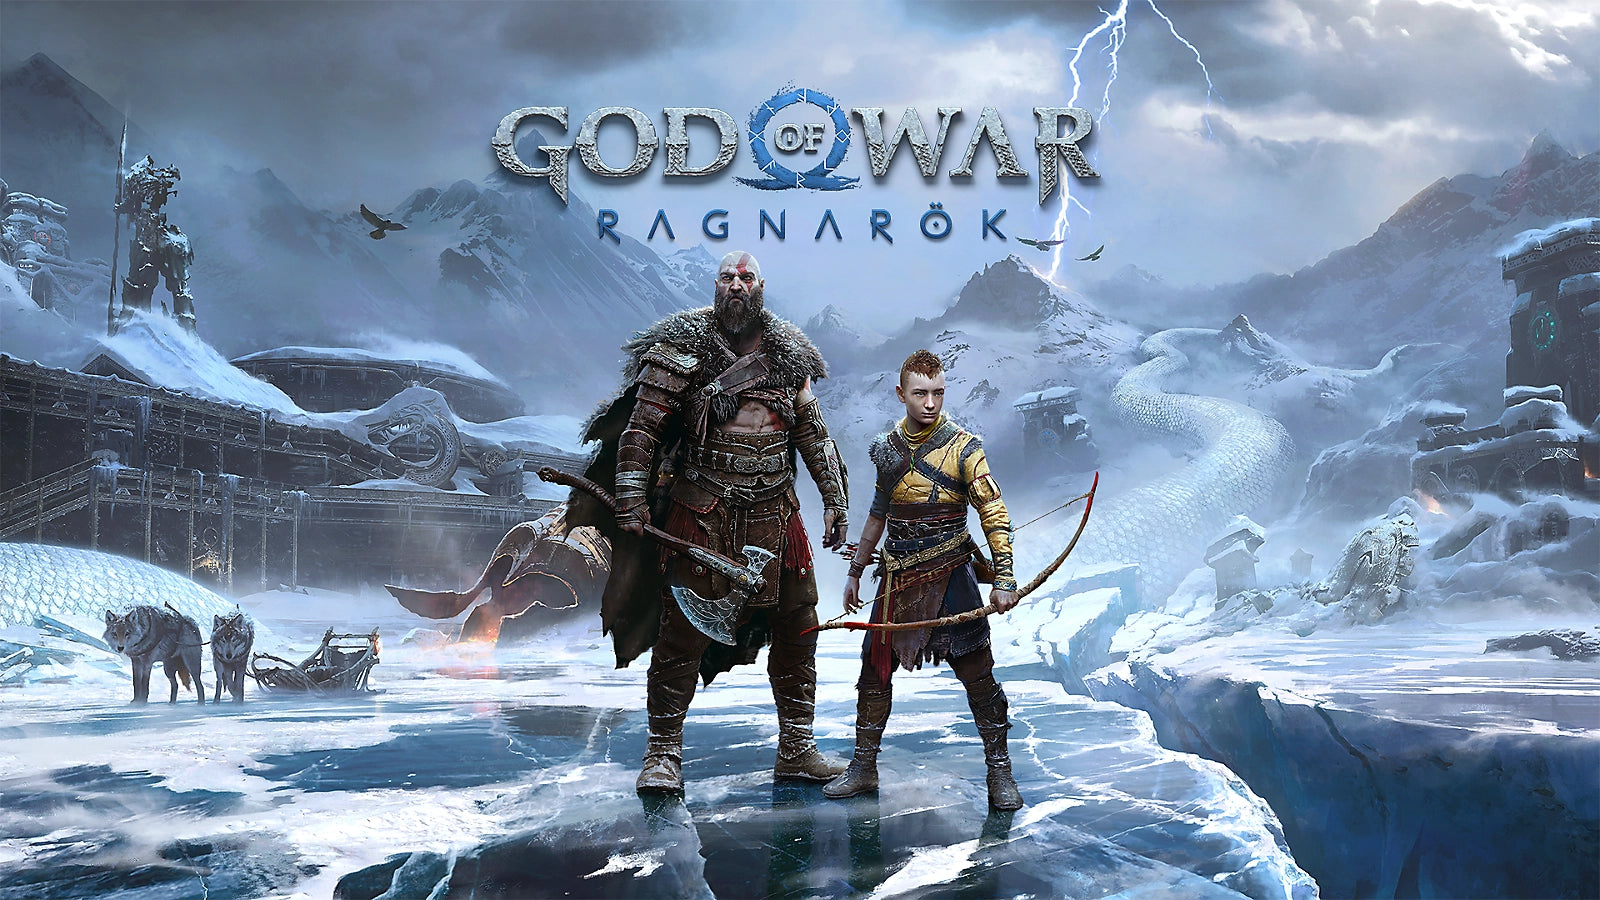 Flash vidéo - Jeux vidéo God of war ragnarok